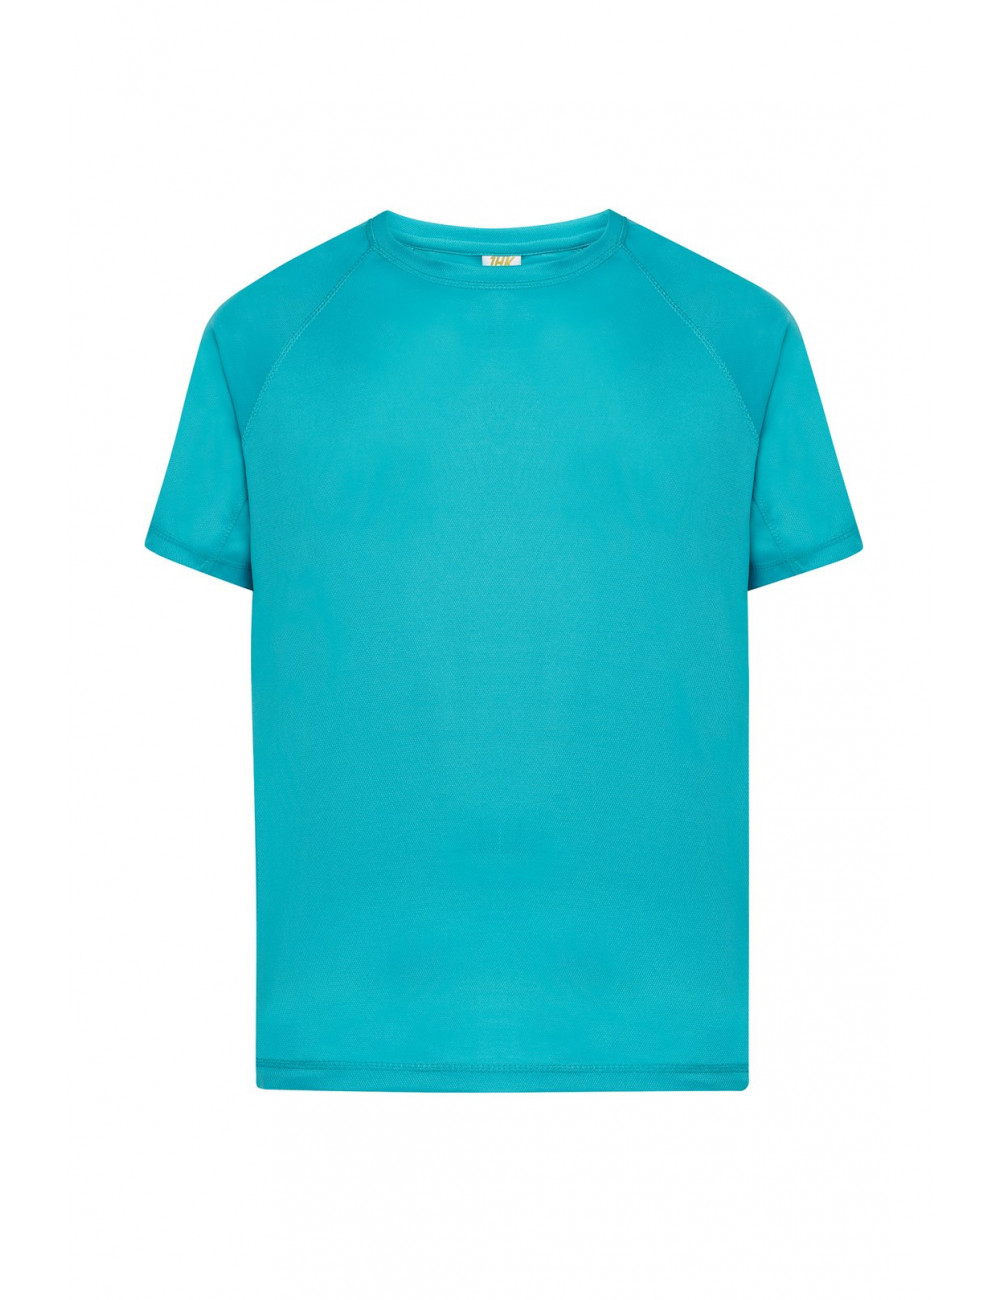 Men`s t-shirt sport man turquoise Jhk